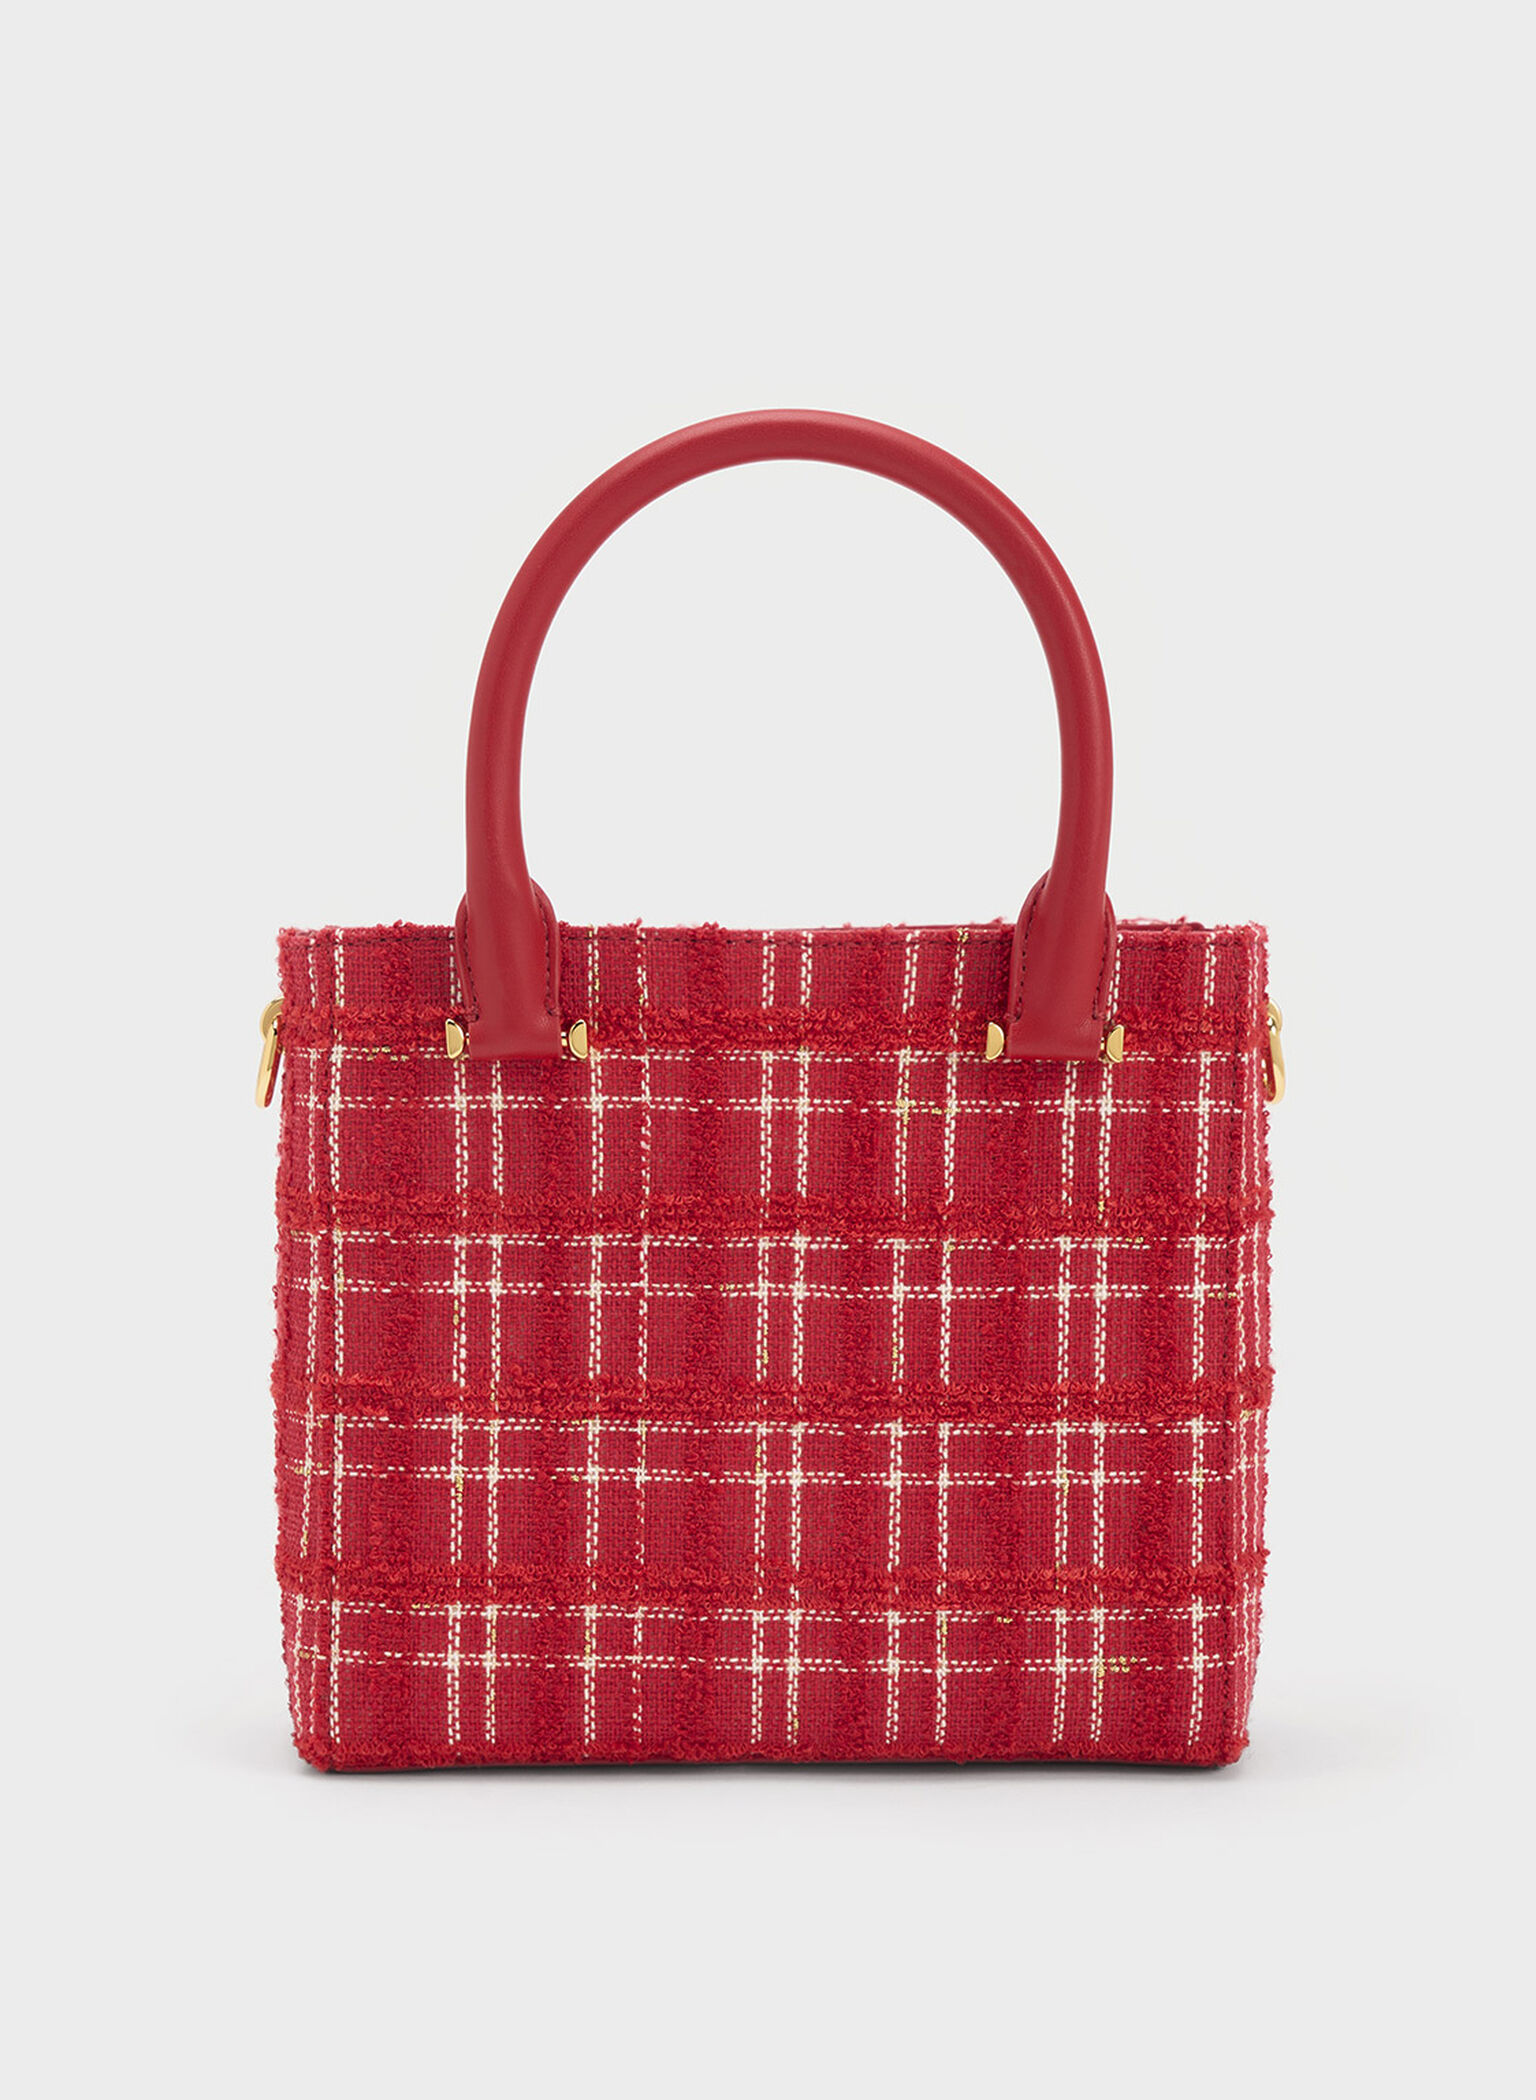 Charles & Keith - Women's Georgette Tweed Square Tote Bag, Red, M